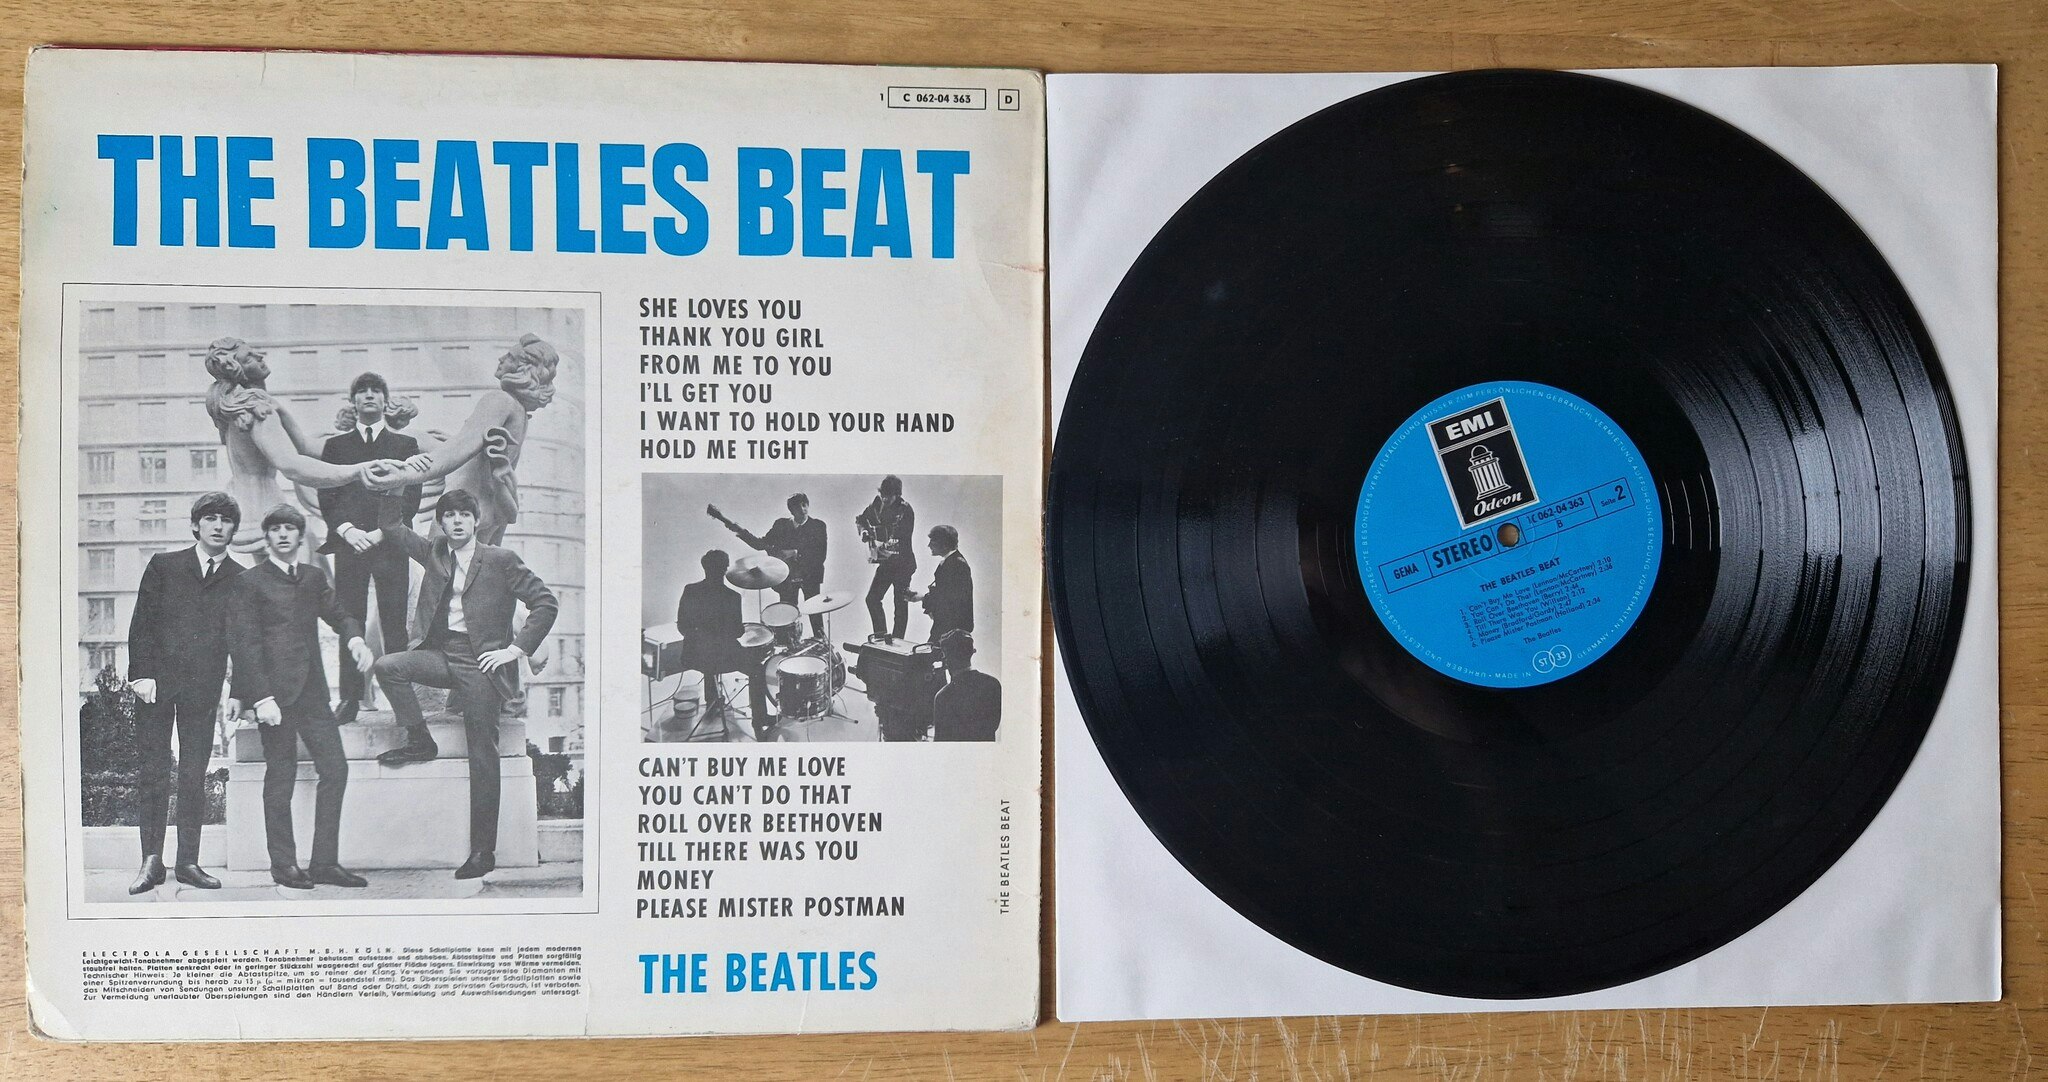 The Beatles, The Beatles Beat. Vinyl LP